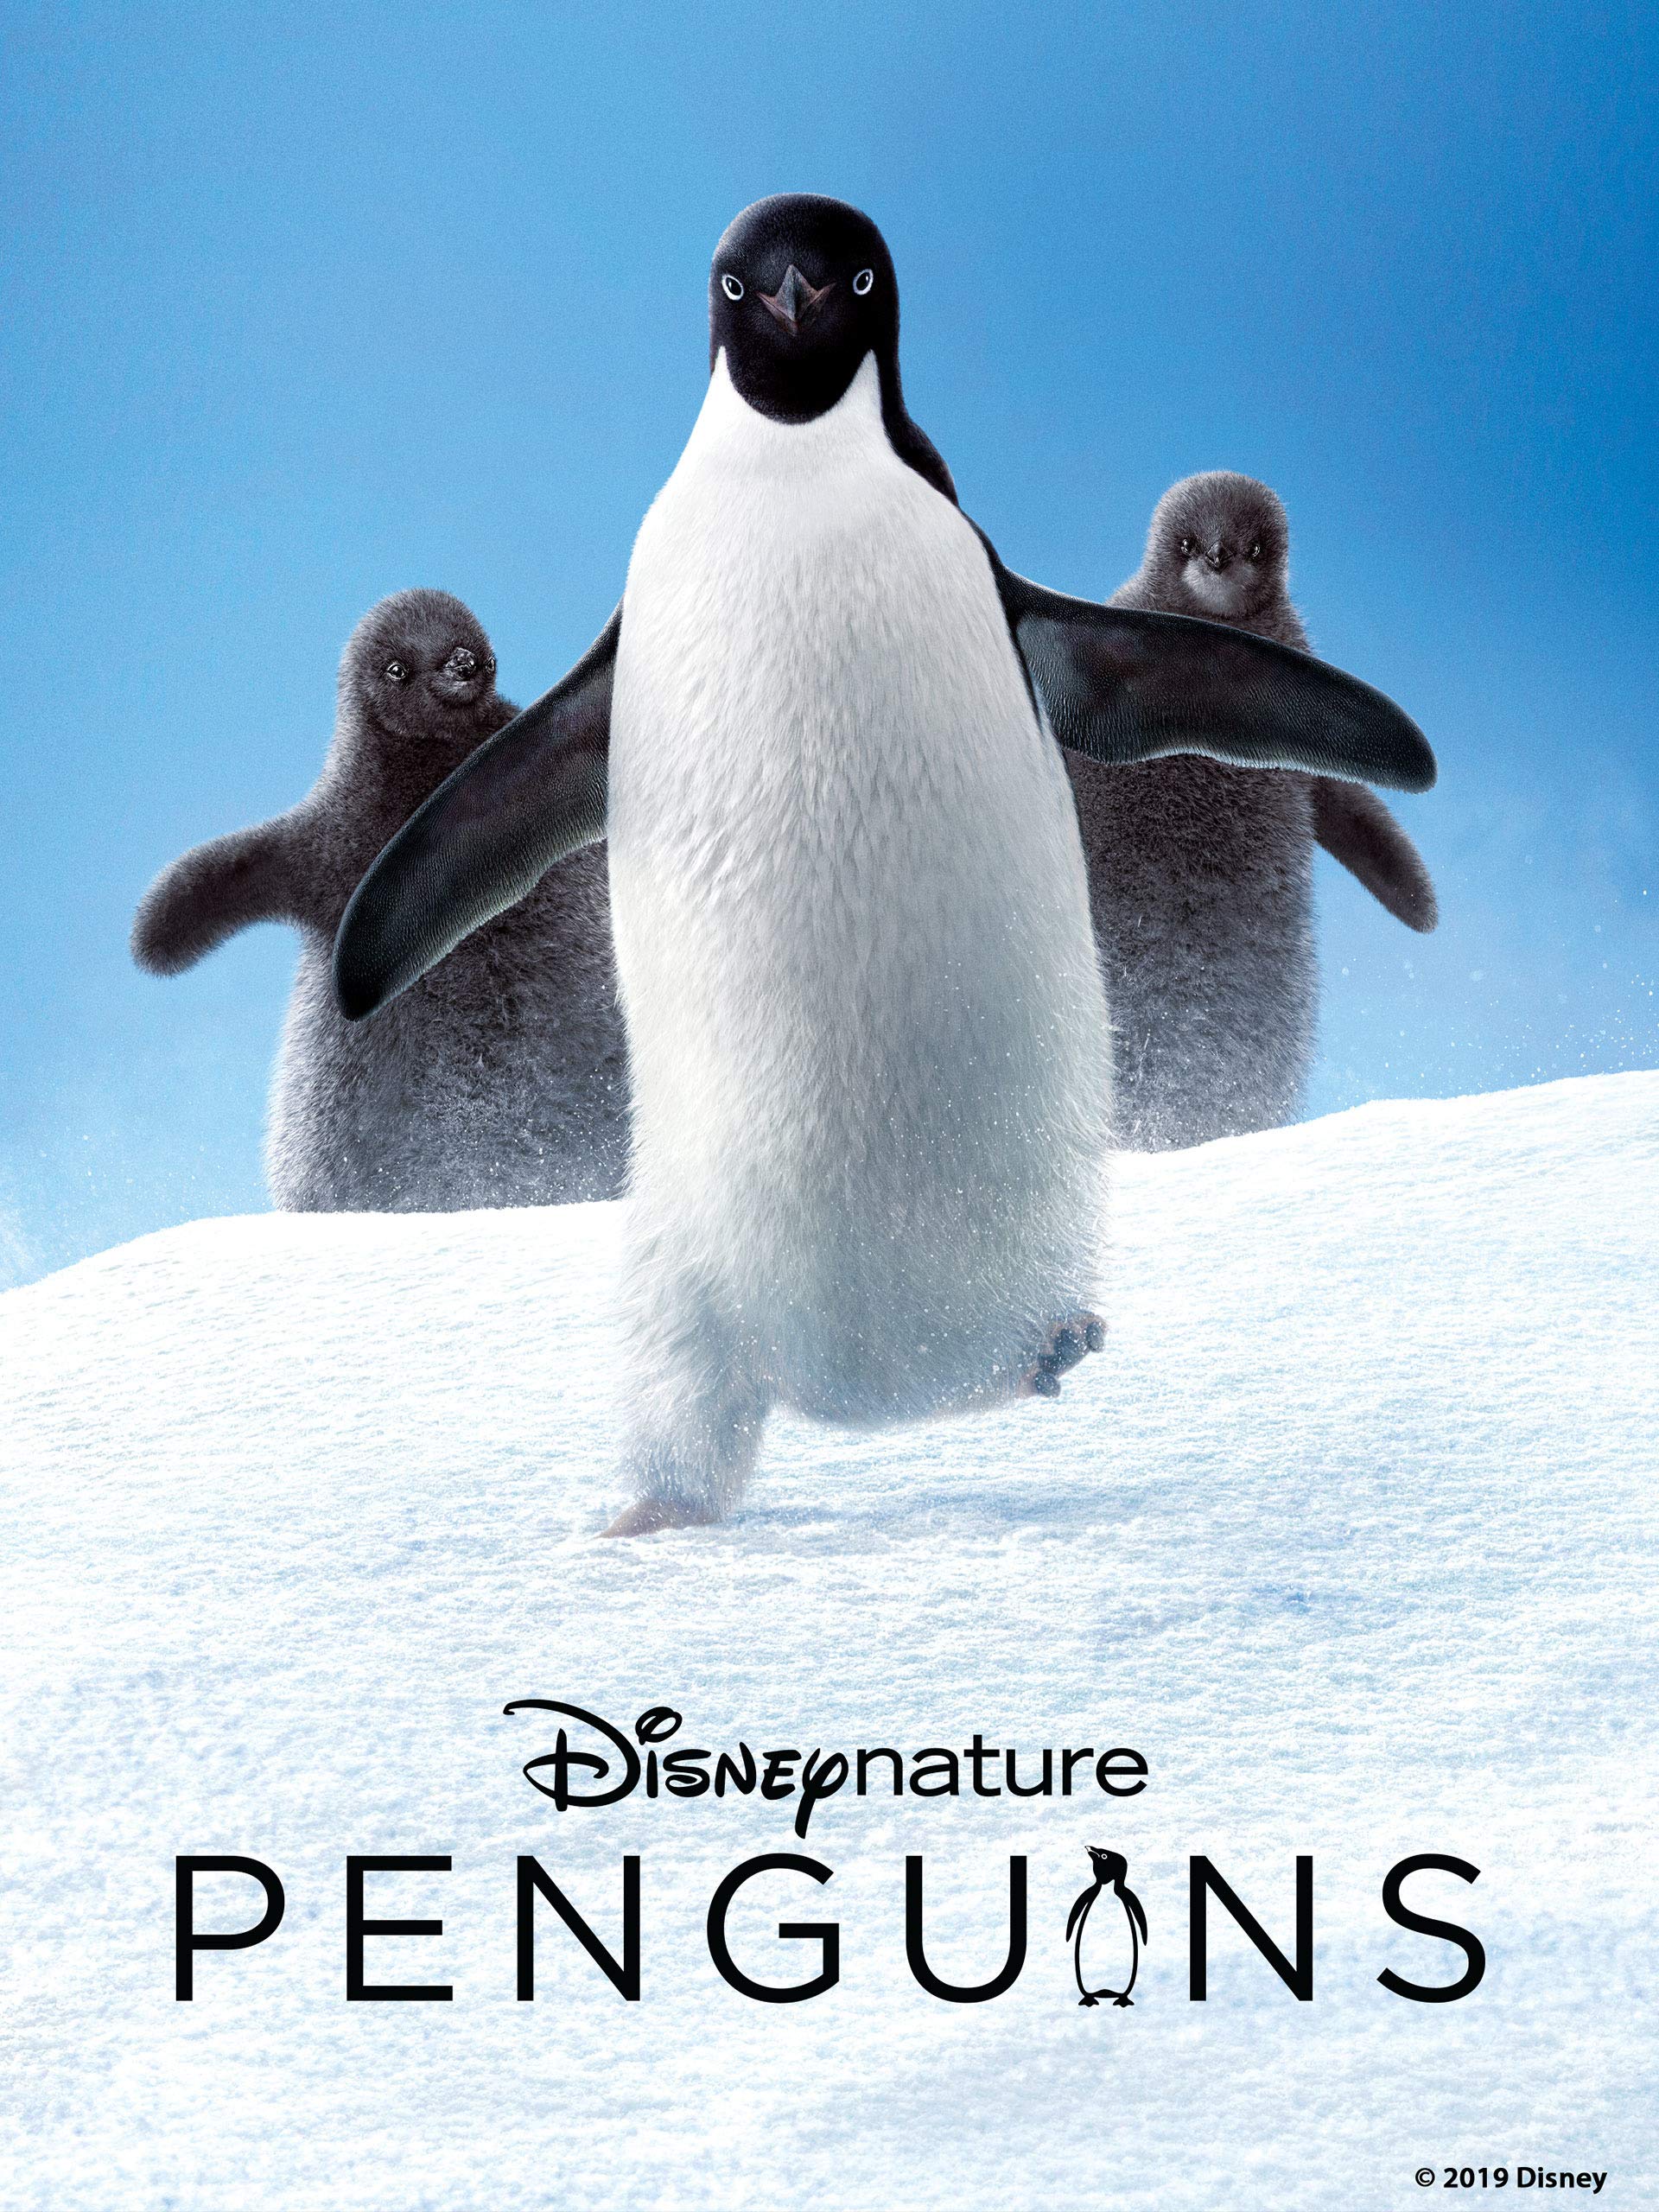 Disneynature Penguins